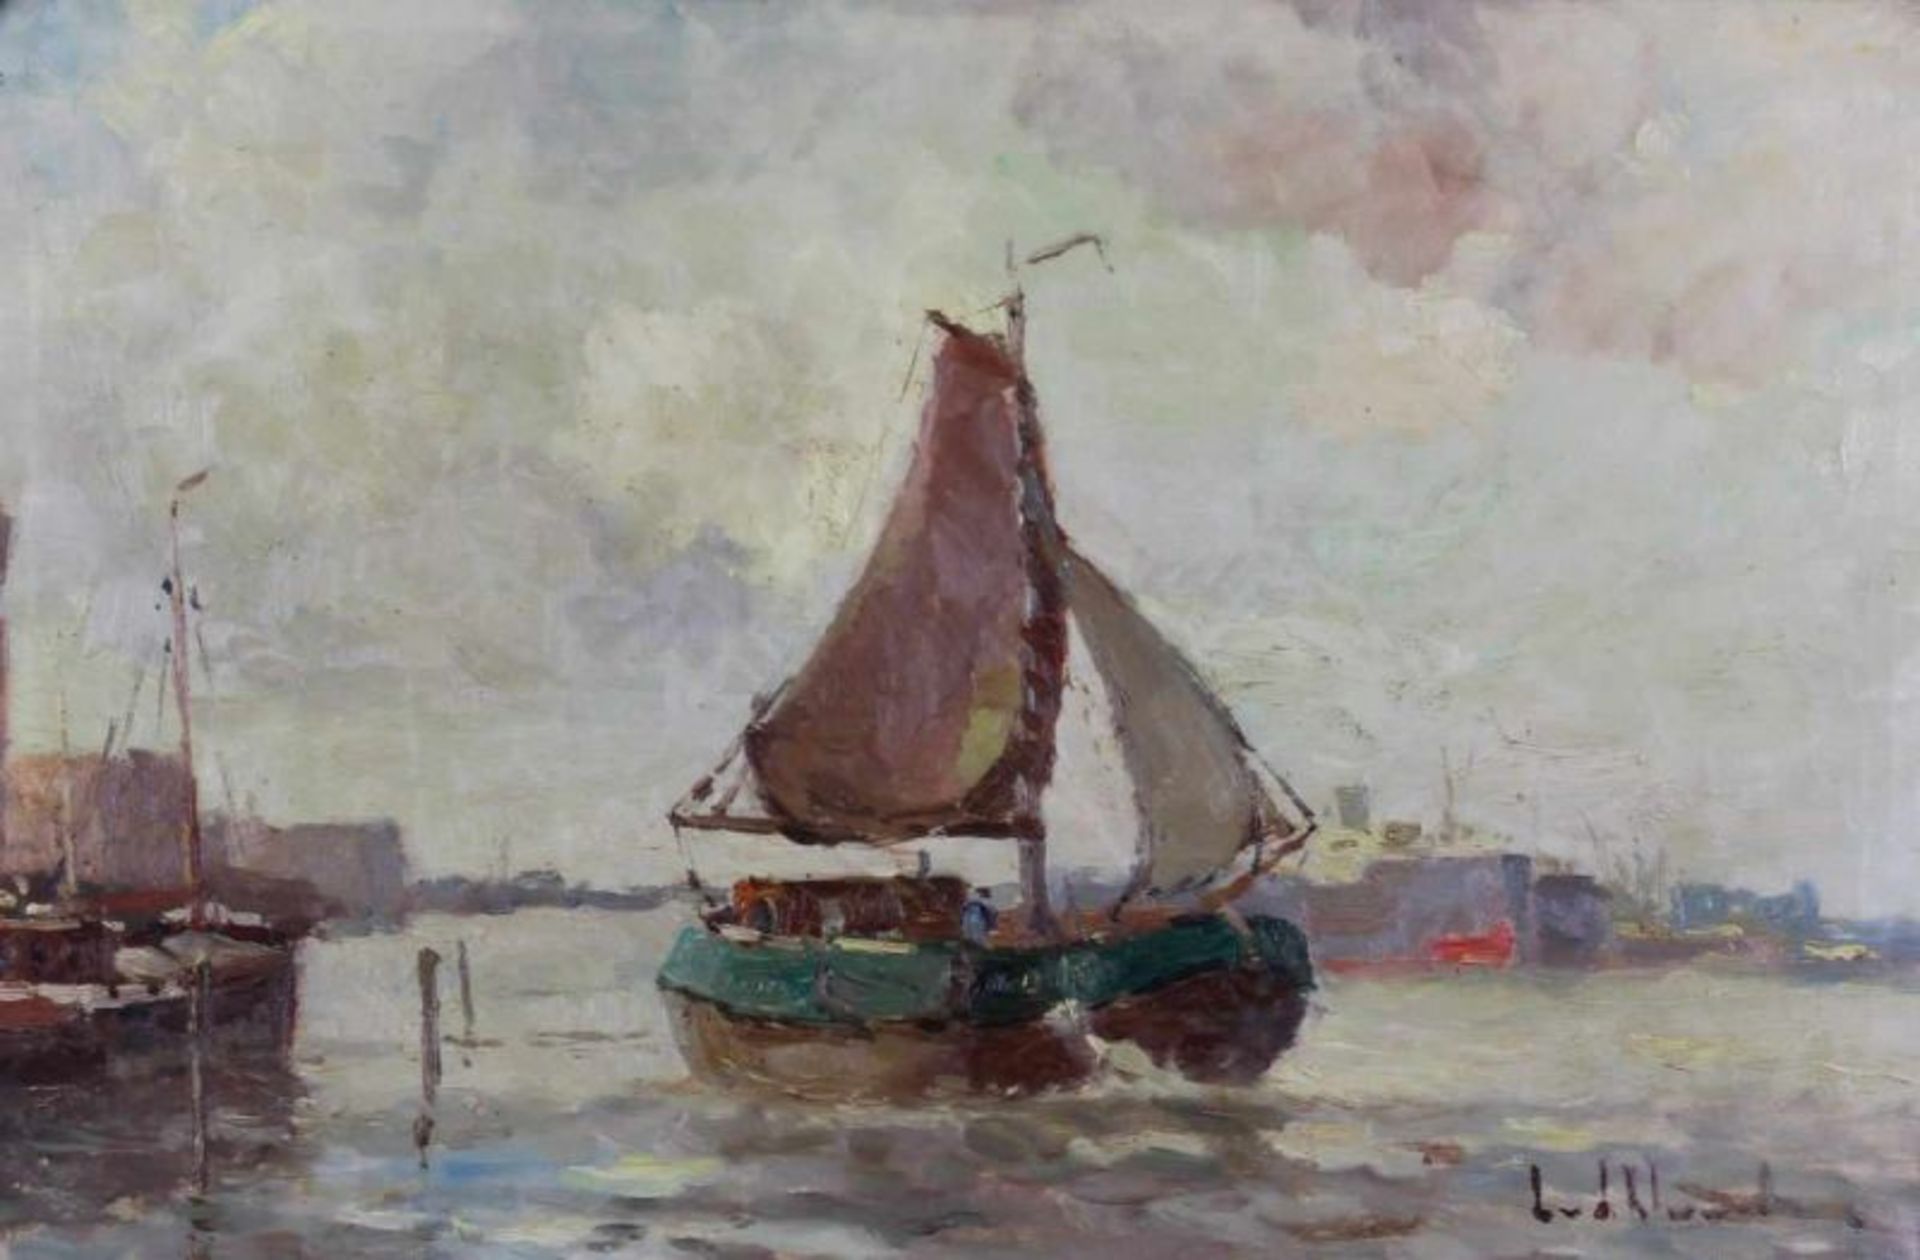 Unbekannter Maler (20. Jh.), "Segelschiff", Öl auf Leinwand, unten rechts Lud. Klu..., 40 x 61 cm